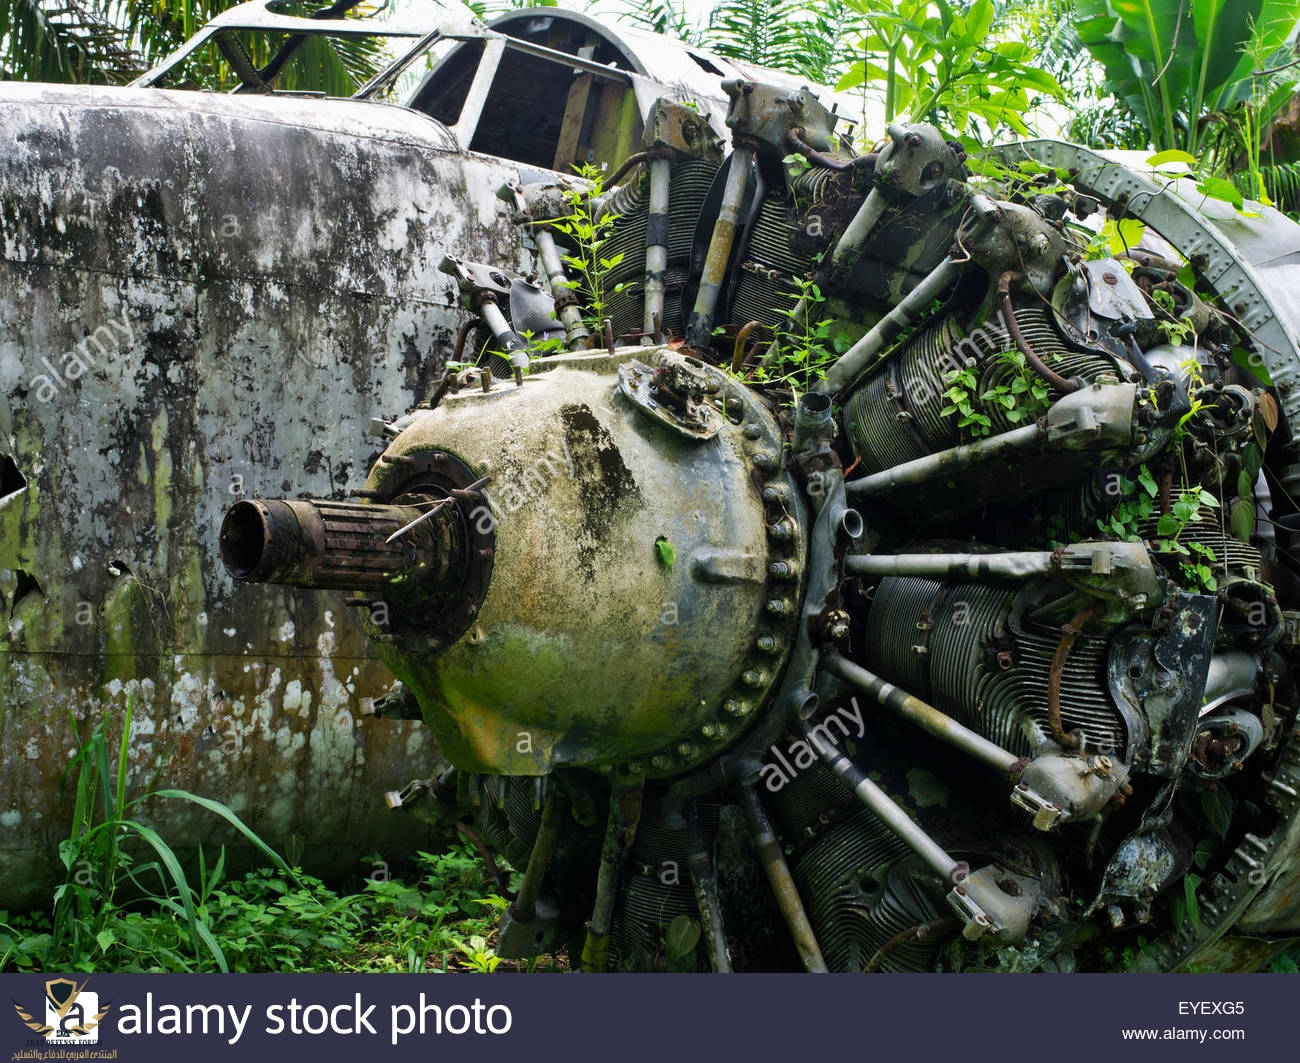 ww11-aircraft-wreck-near-kimbe-west-new-britain-papua-new-guinea-EYEXG5.jpg